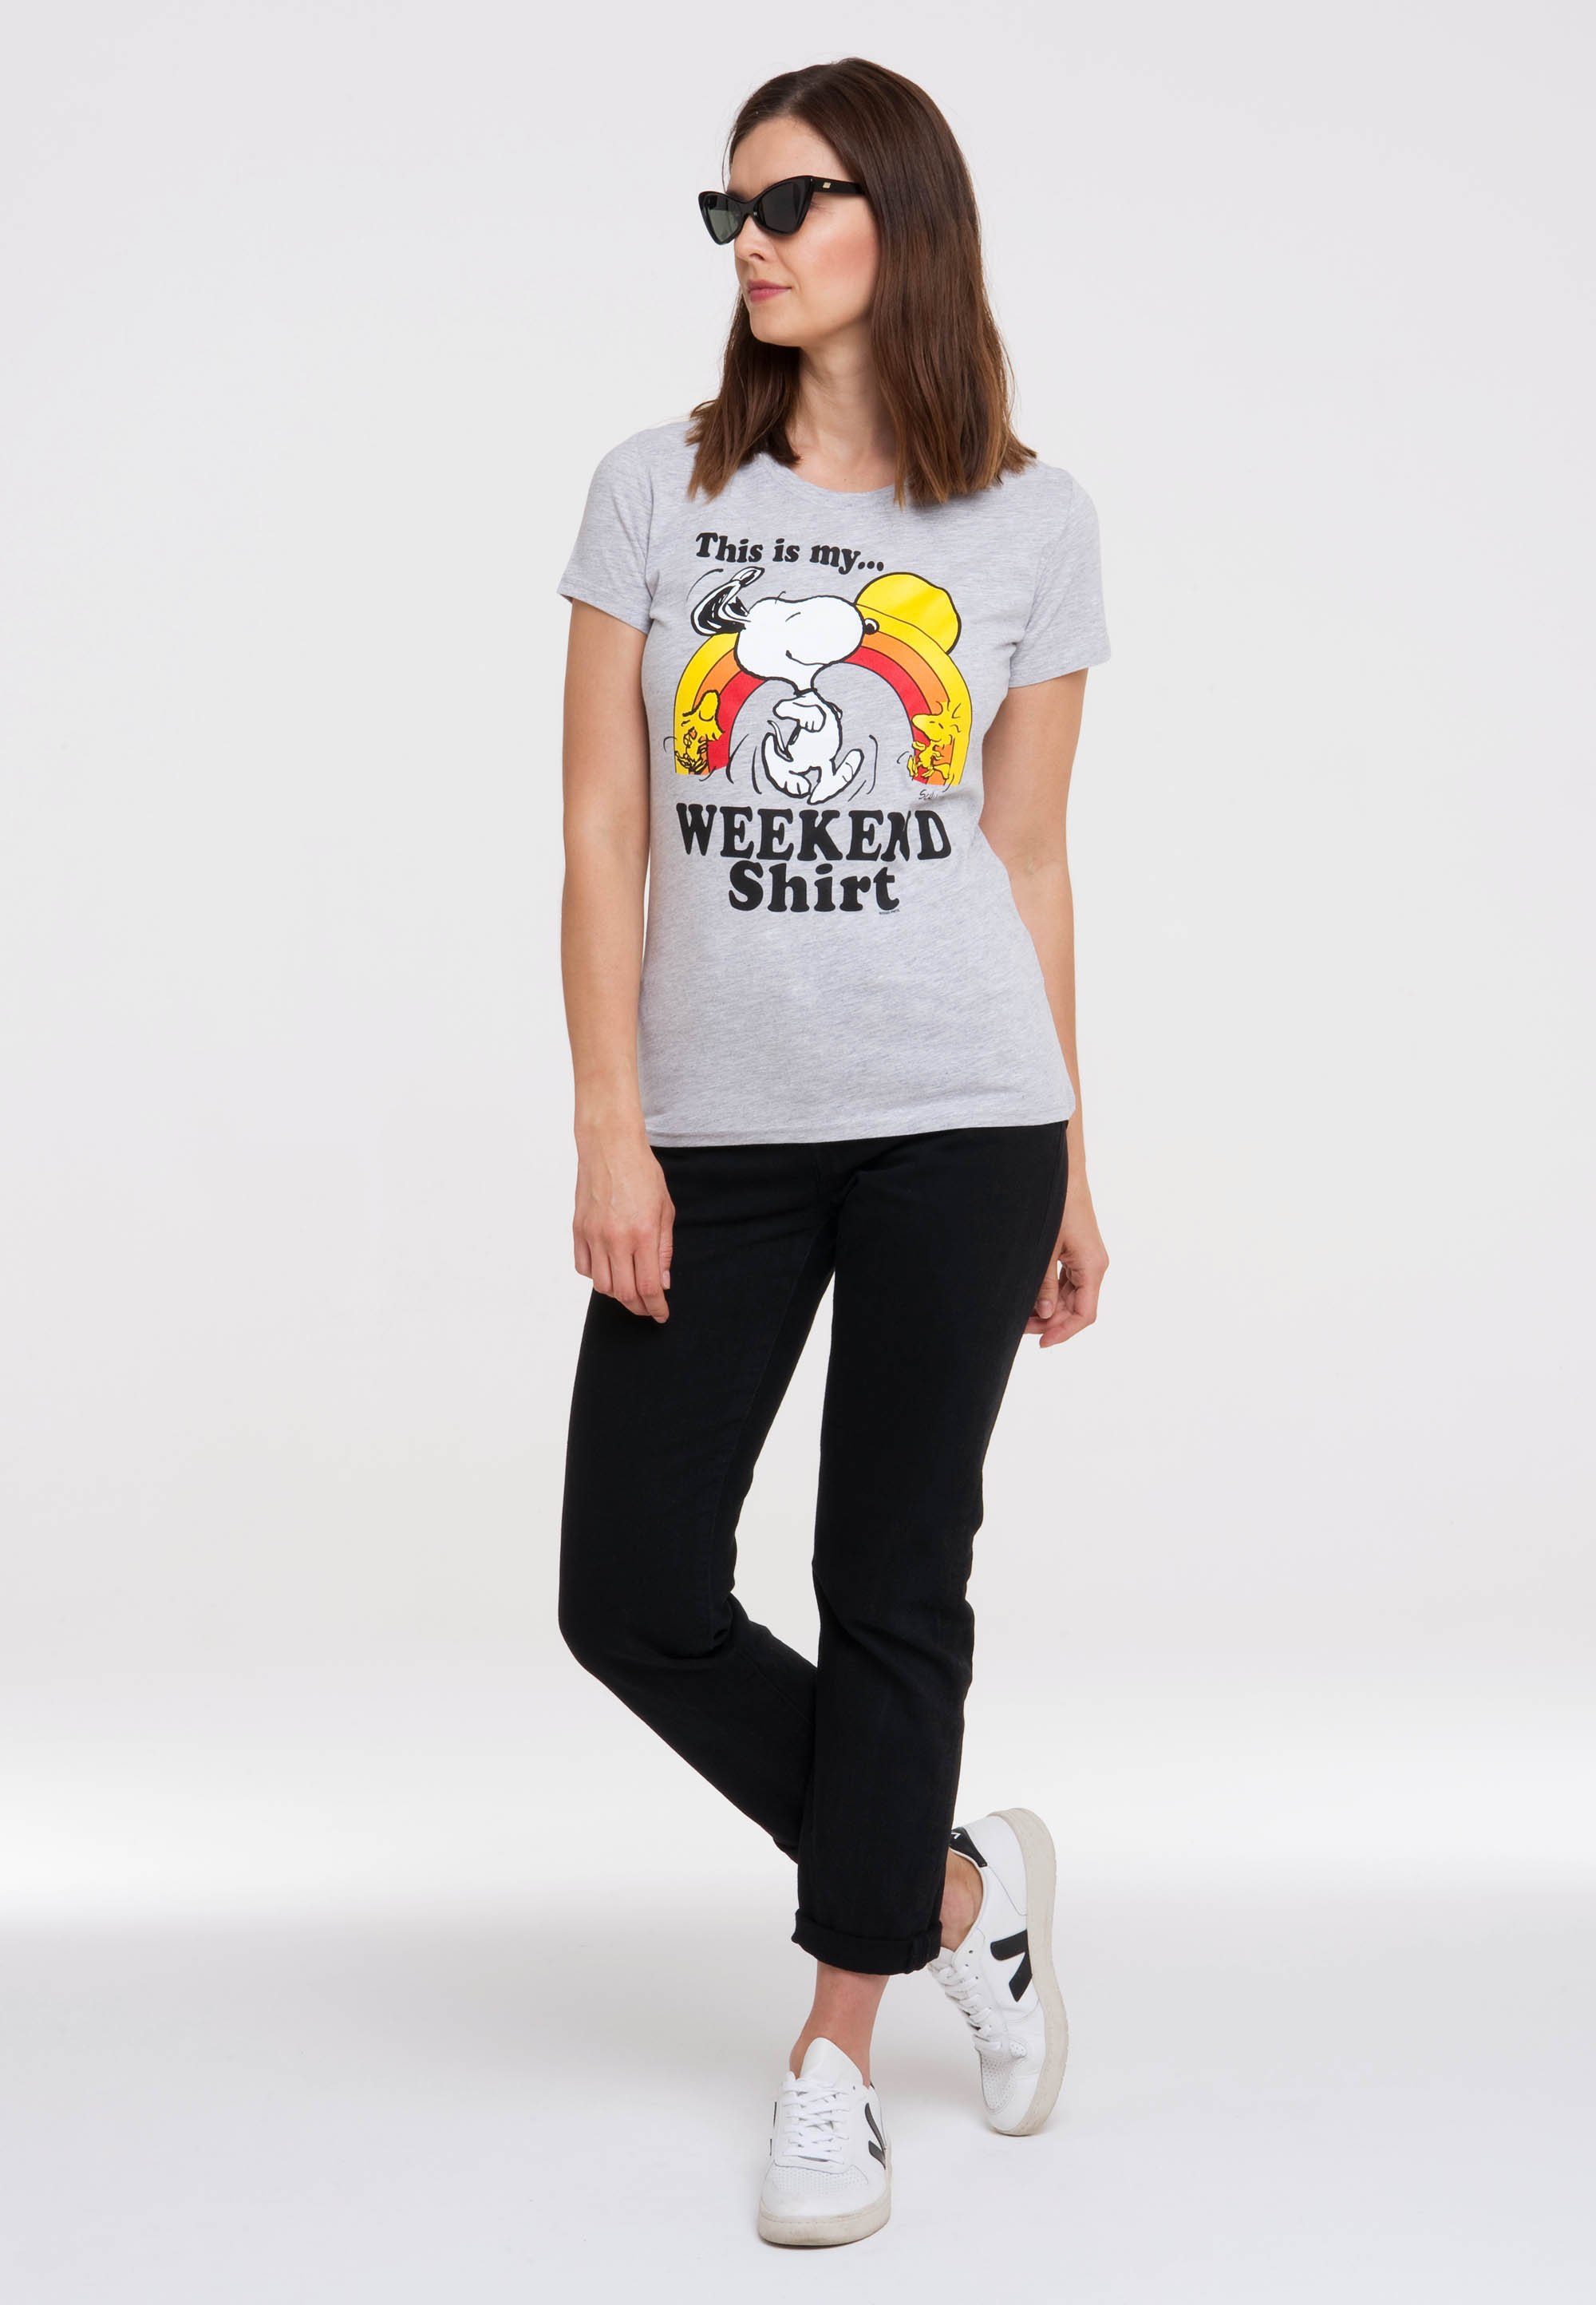 - & T-Shirt Originaldesign Woodstock Peanuts Snoopy LOGOSHIRT - Weekend lizenziertem mit